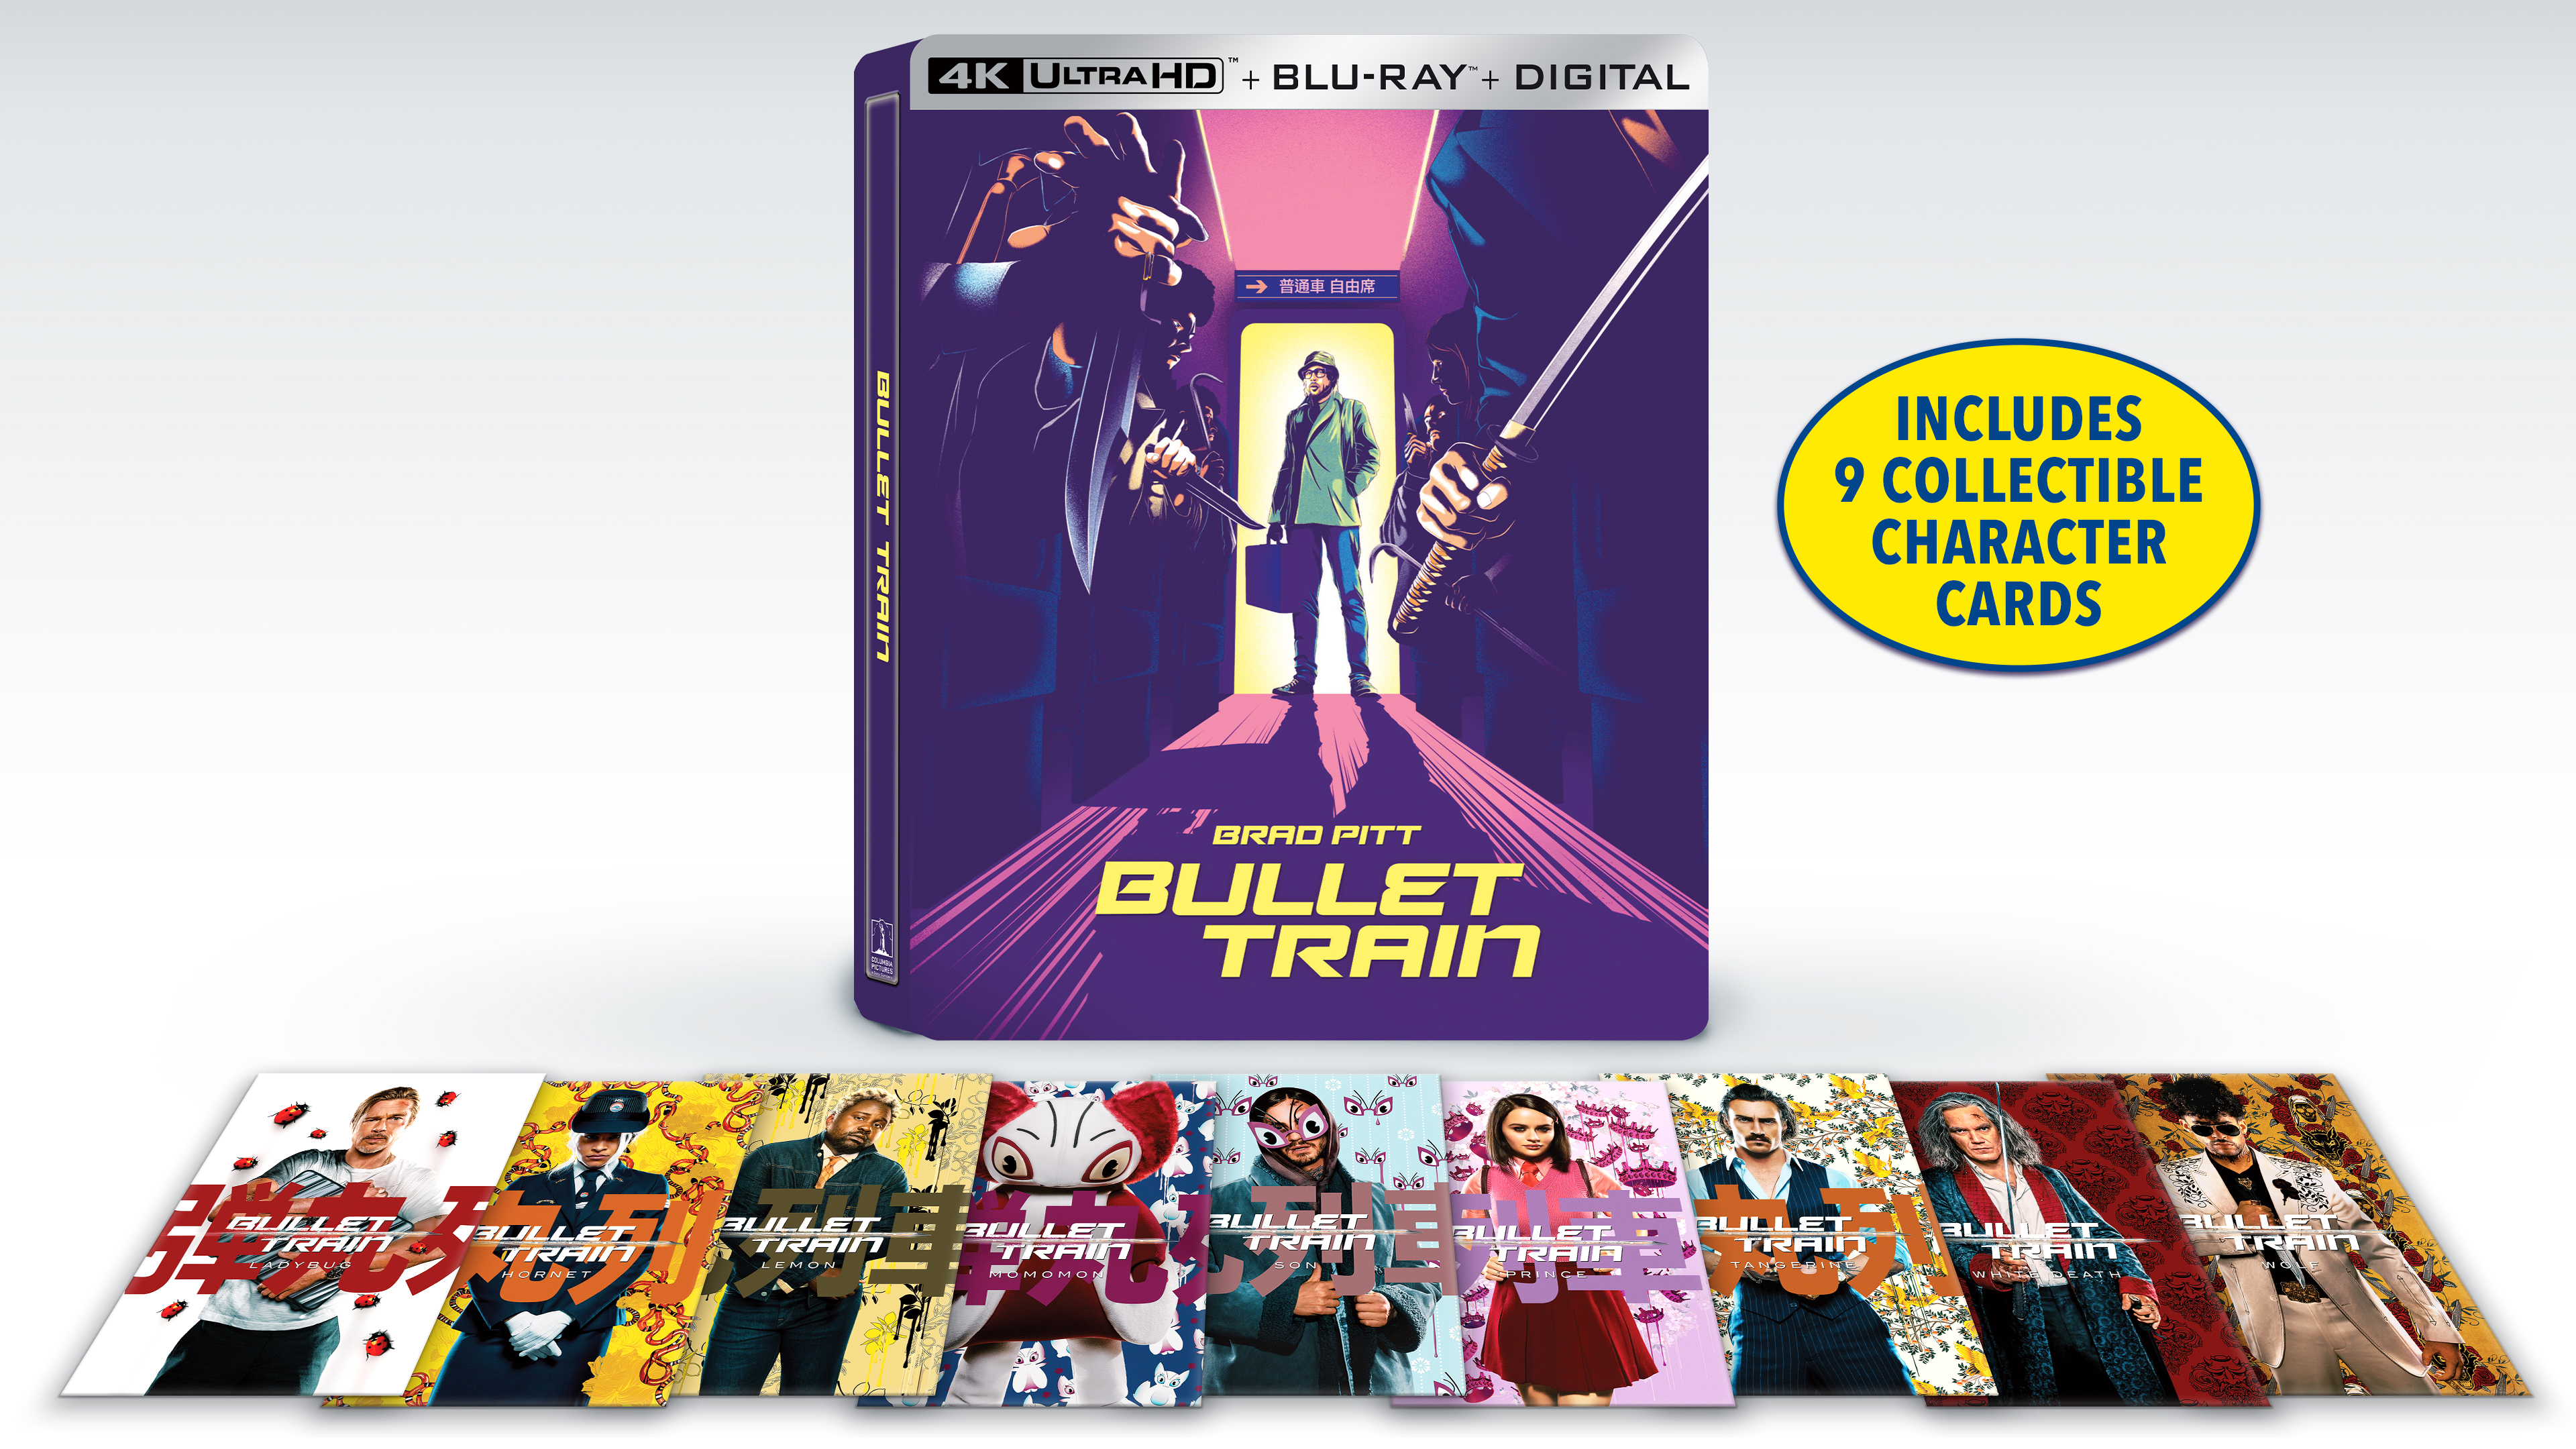 Equalizer 3 [Includes Digital Copy] [SteelBook] [4k Ultra HD  Blu-ray/Blu-ray] [Only @ Best Buy] - Best Buy